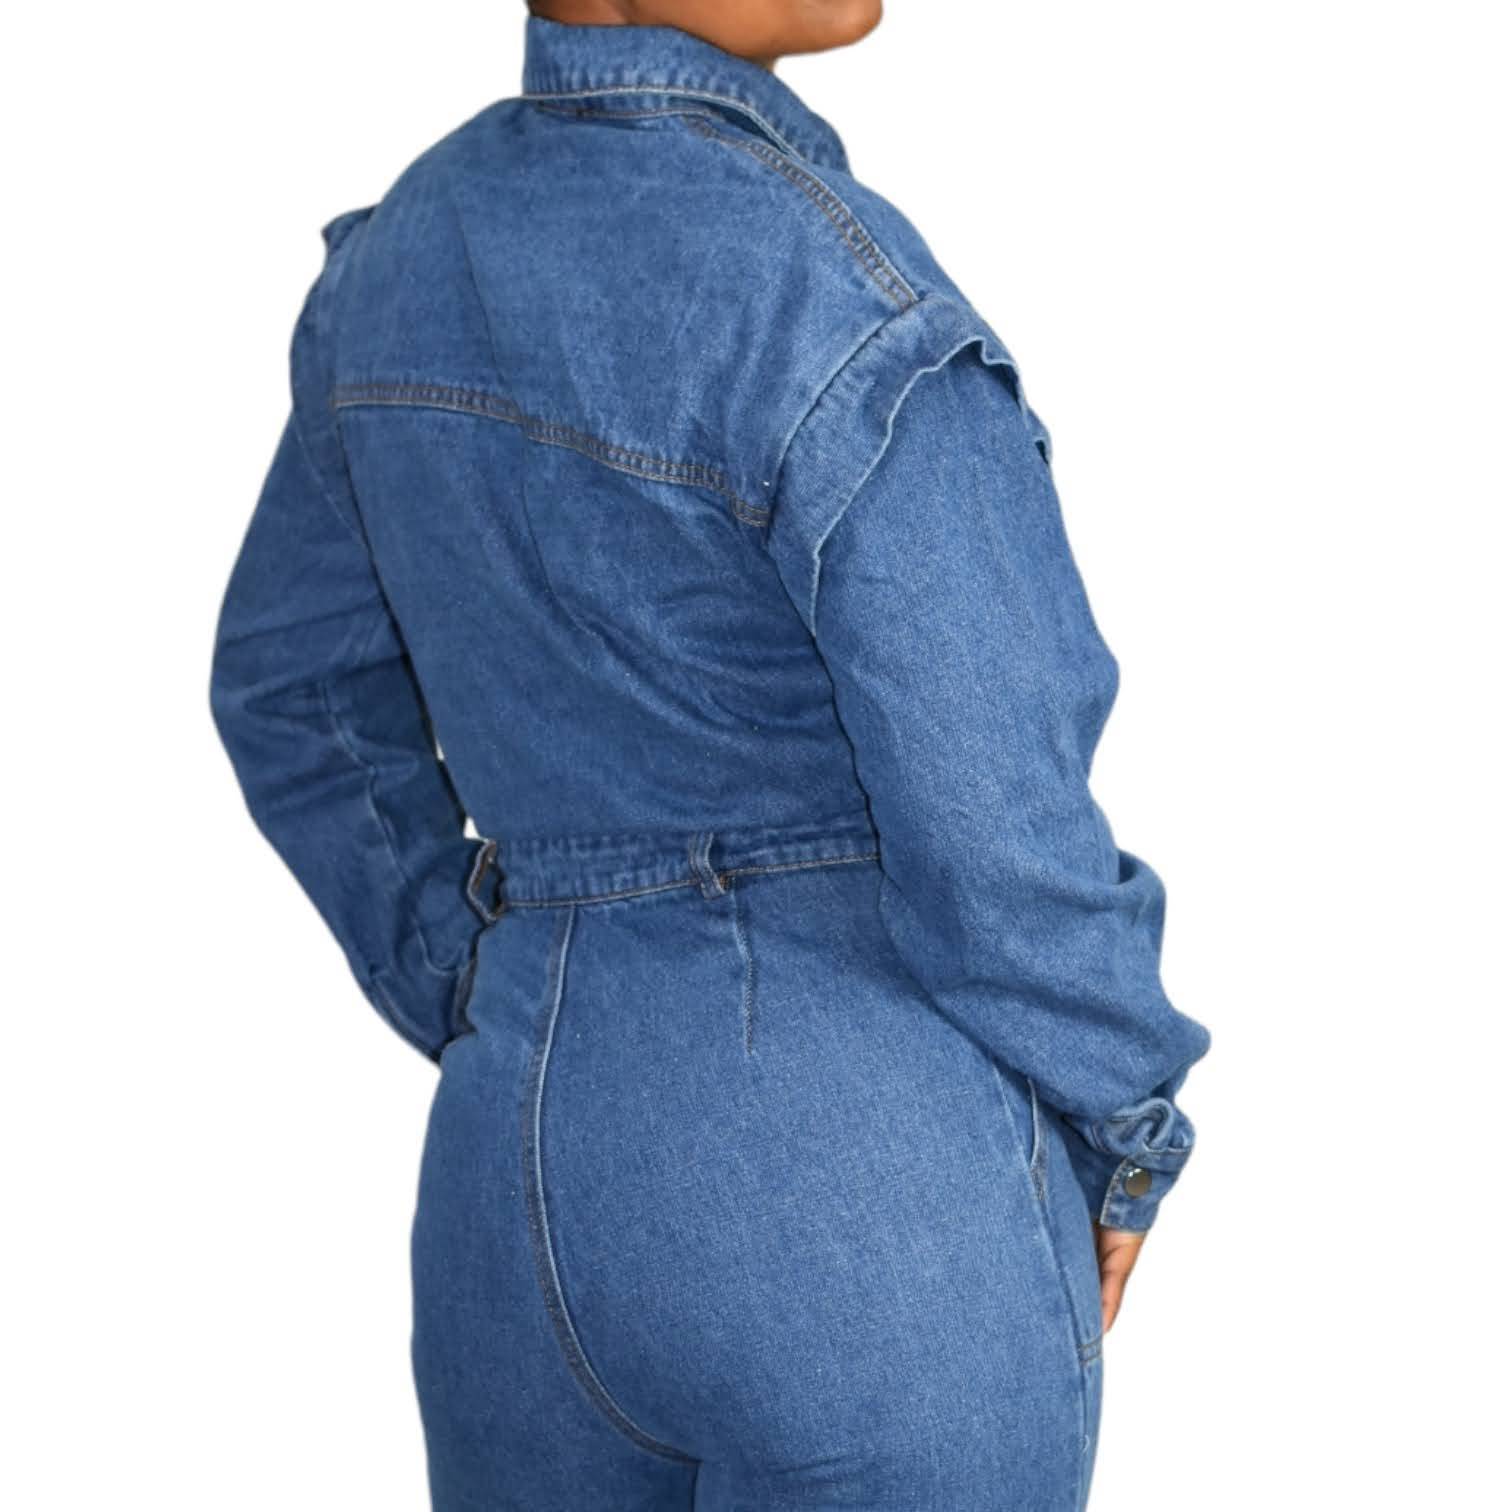 Fashion Nova Denim Utility Jumpsuit Day to Night Joggers Blue Jeans Size Small